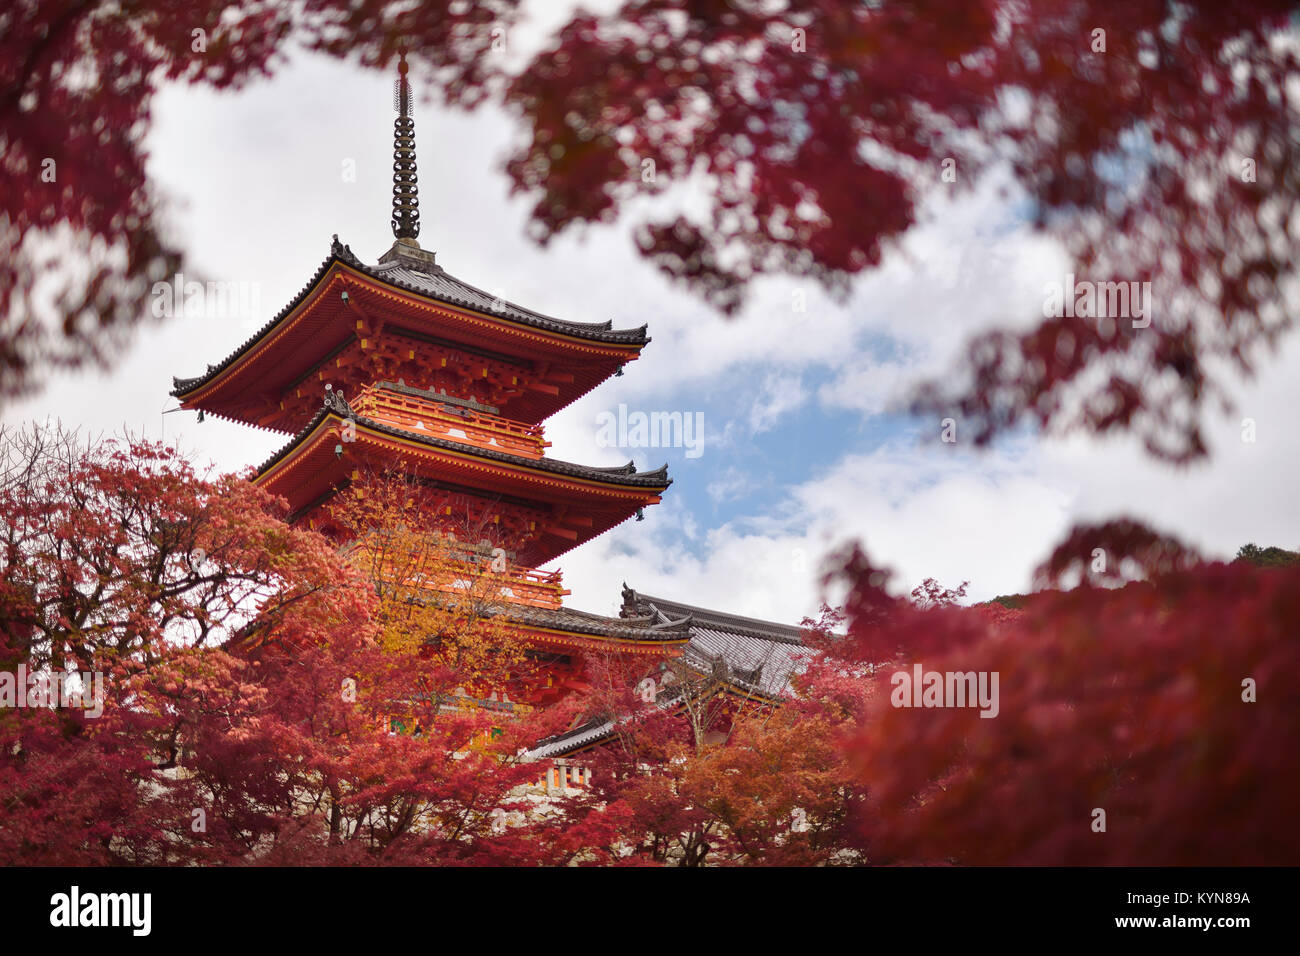 Lizenz und Drucke bei MaximImages.com - Kiyomizu-dera, Kyoto, Japan Reise Stock Foto Stockfoto